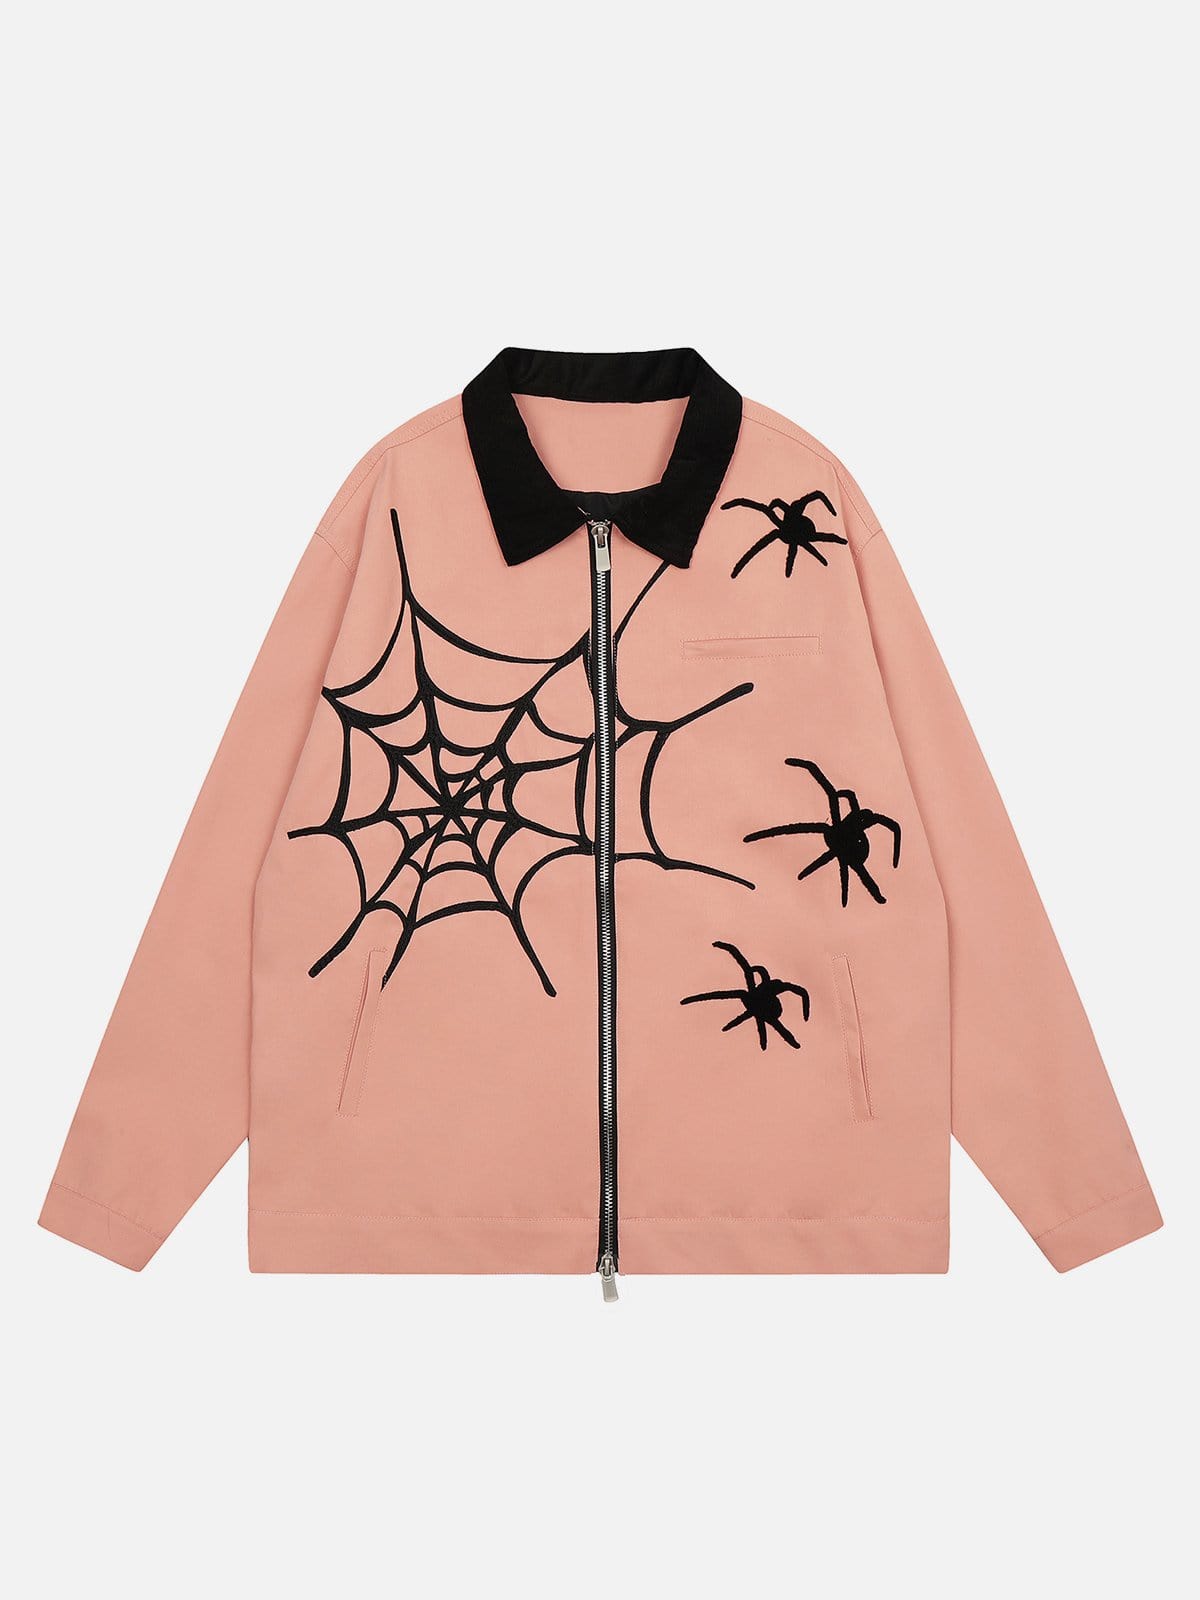 NEV Spider Embroidered Jacket